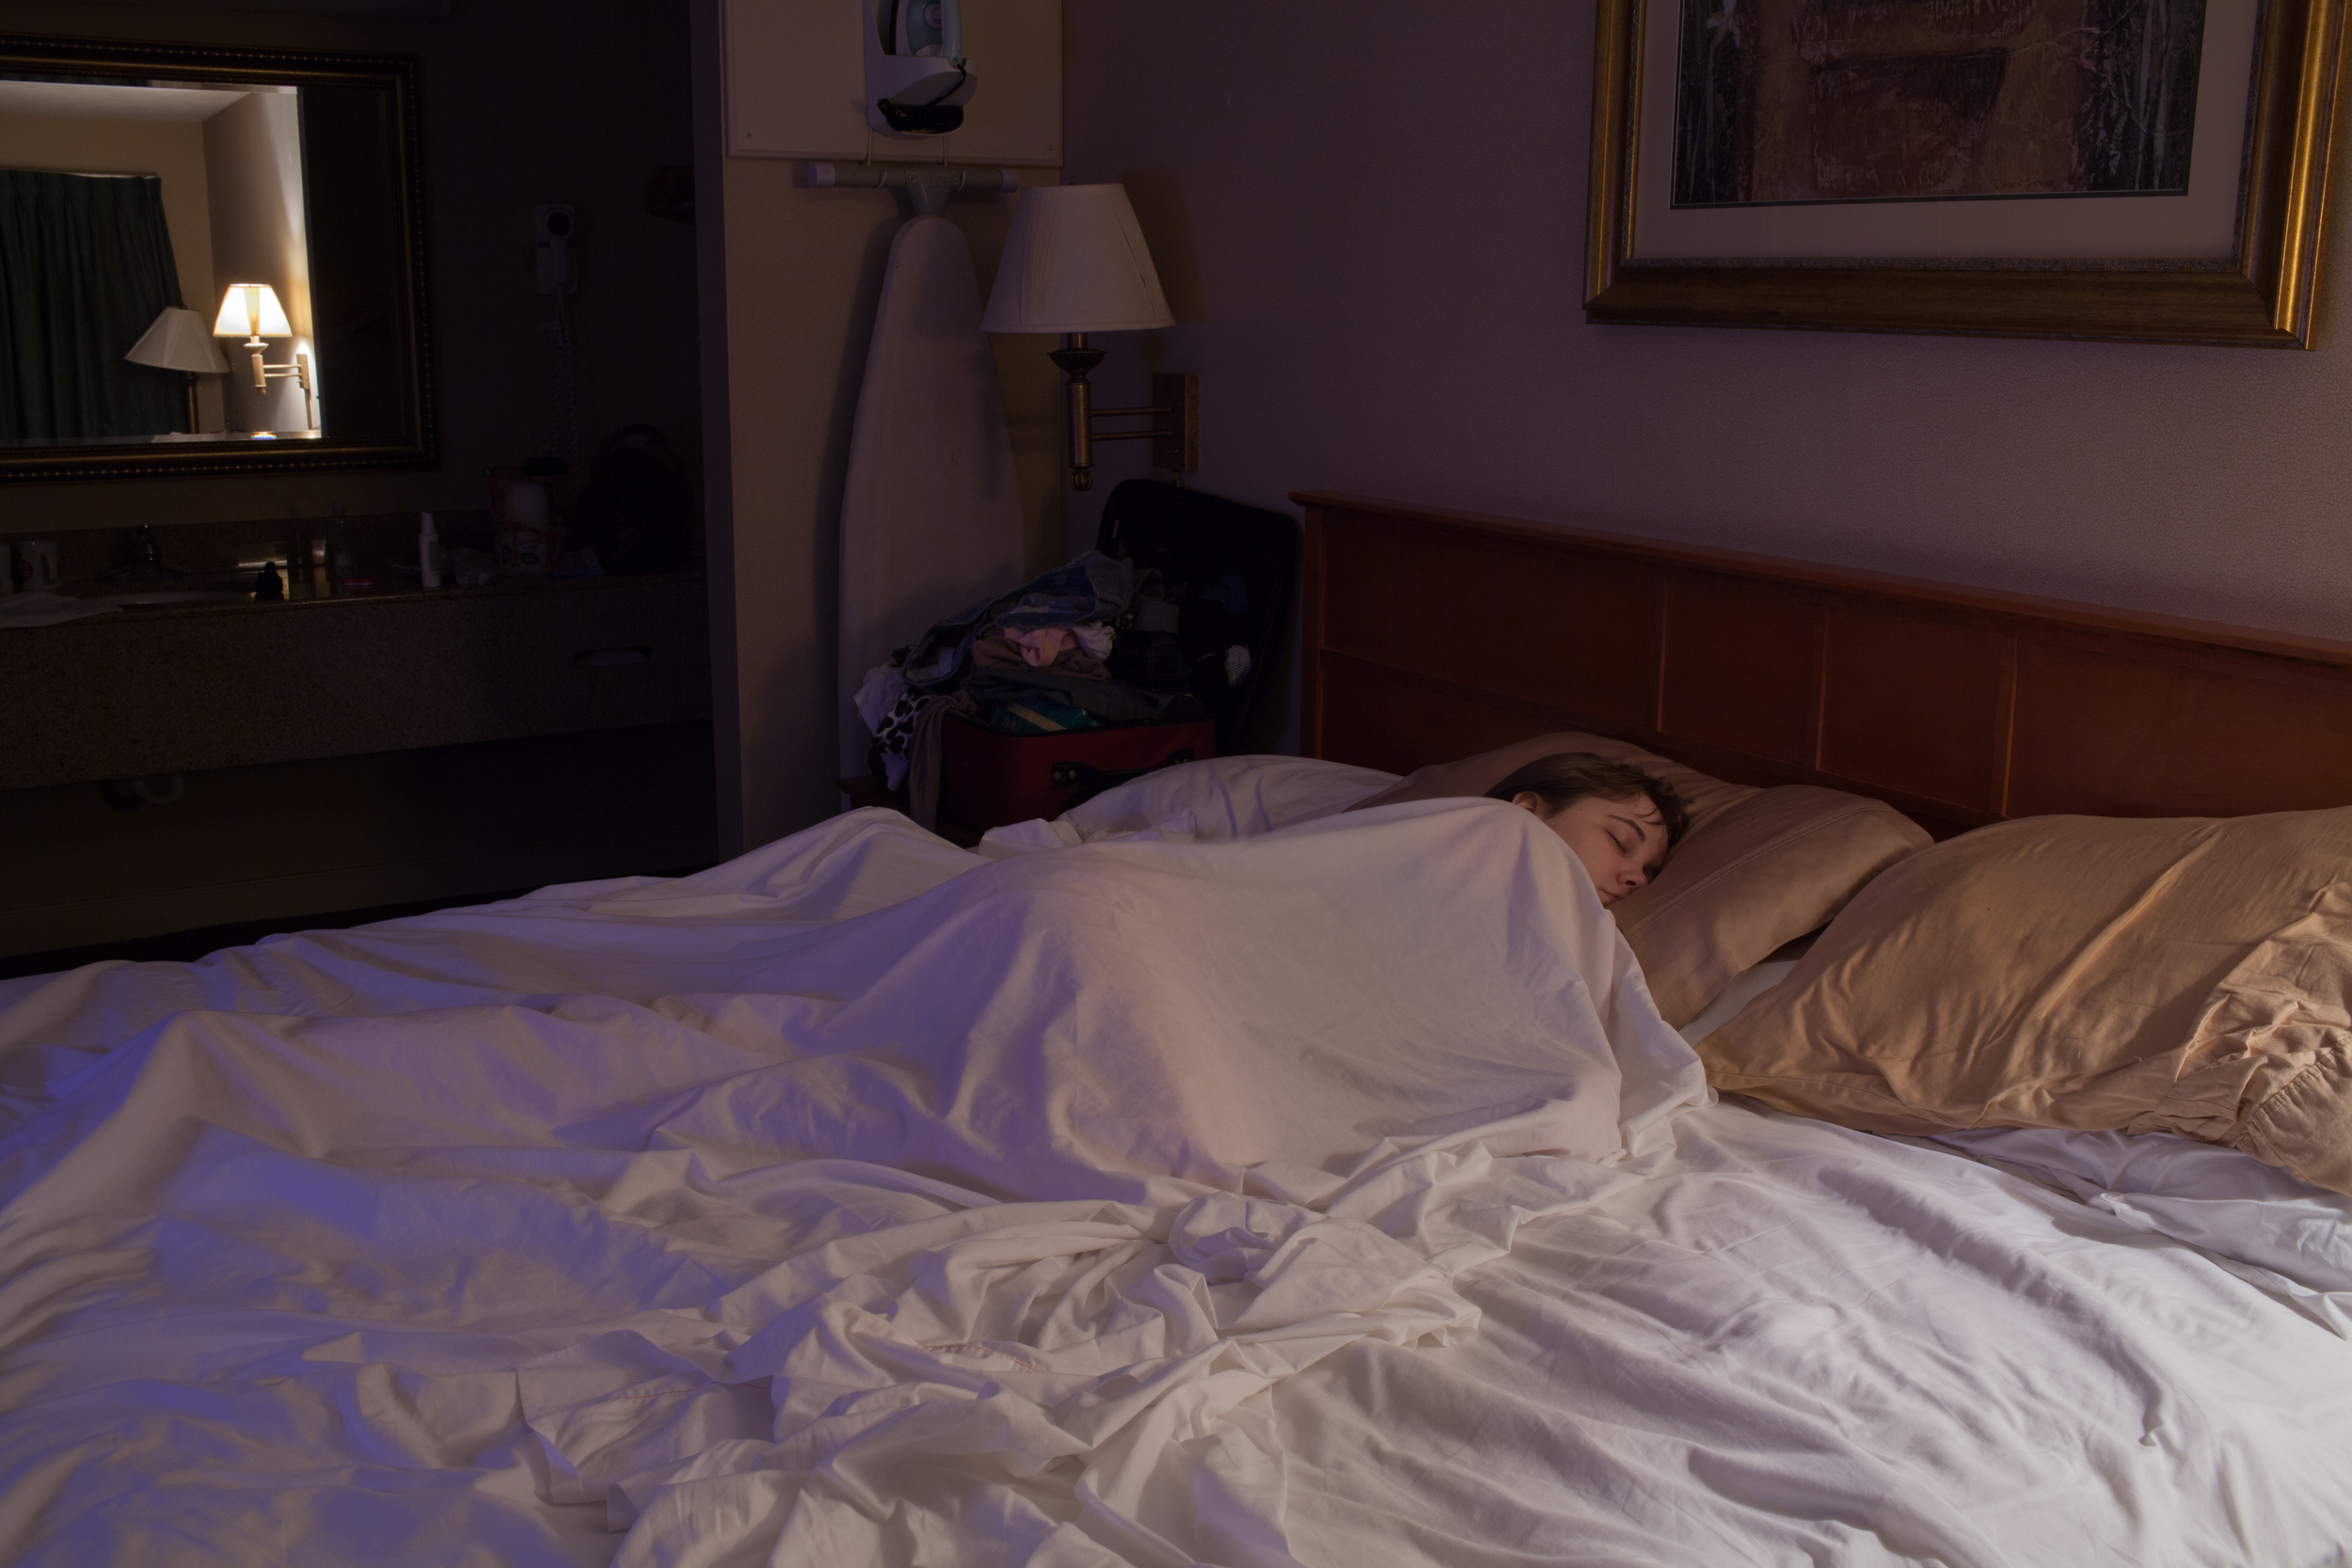  Hannah Asleep in Room 105  2015 